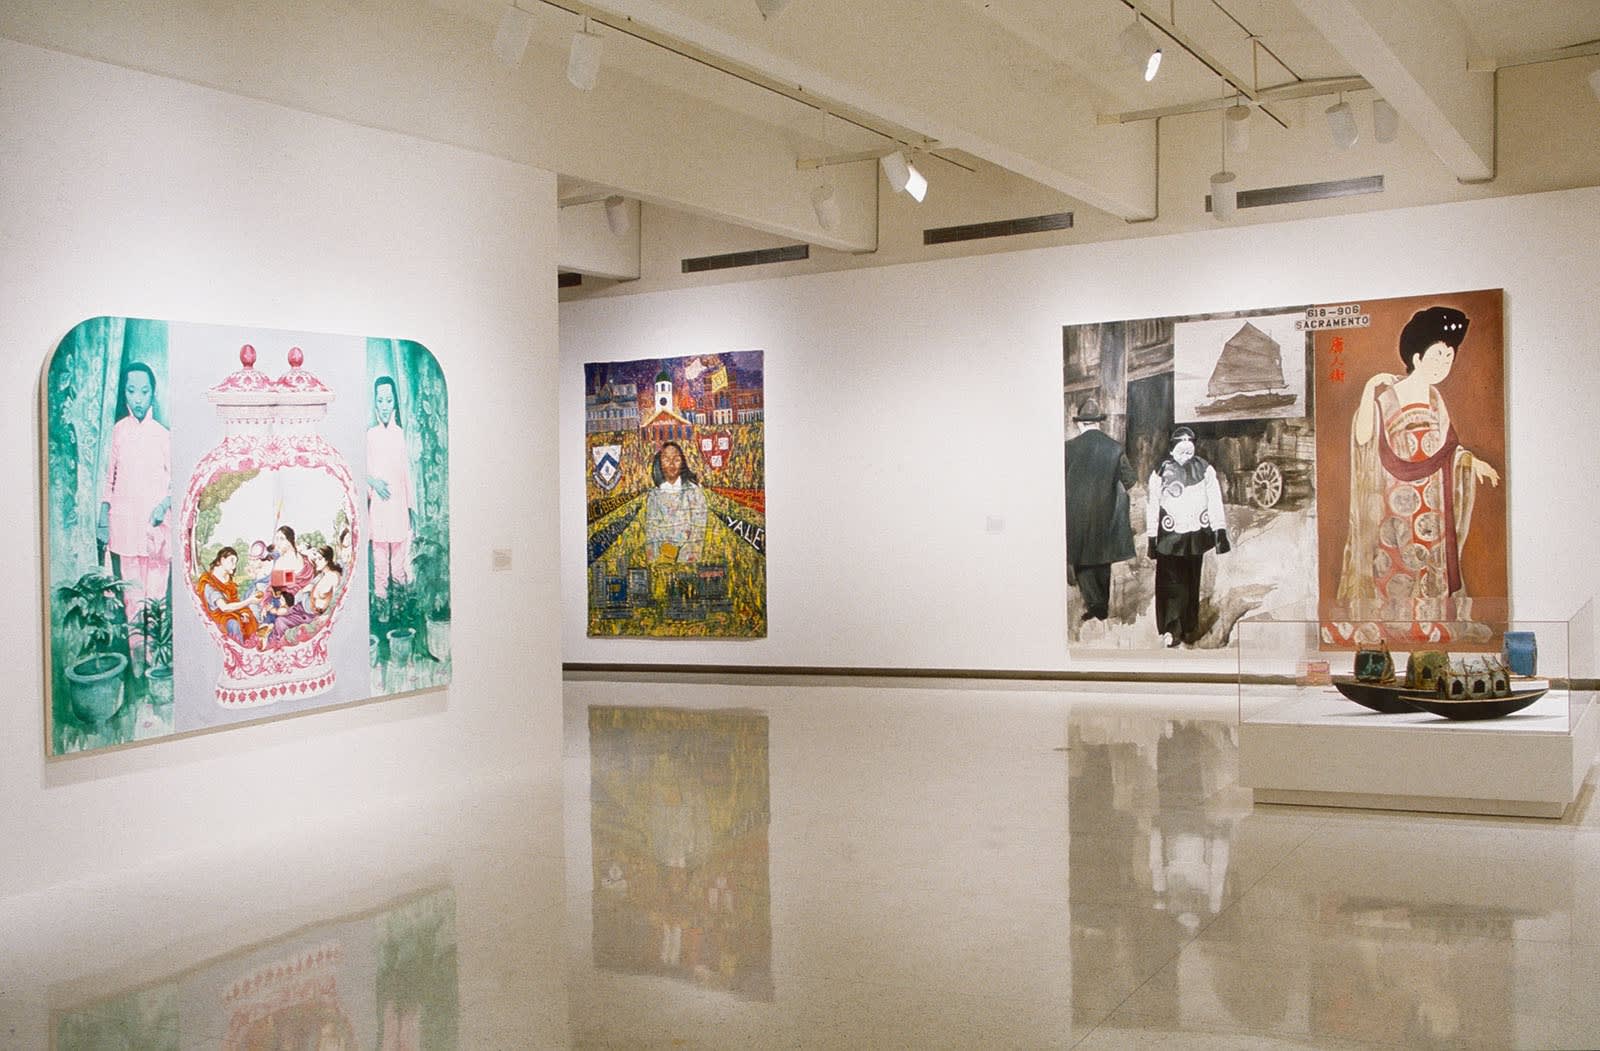 Asia/America: Identities in Contemporary Asian American Art